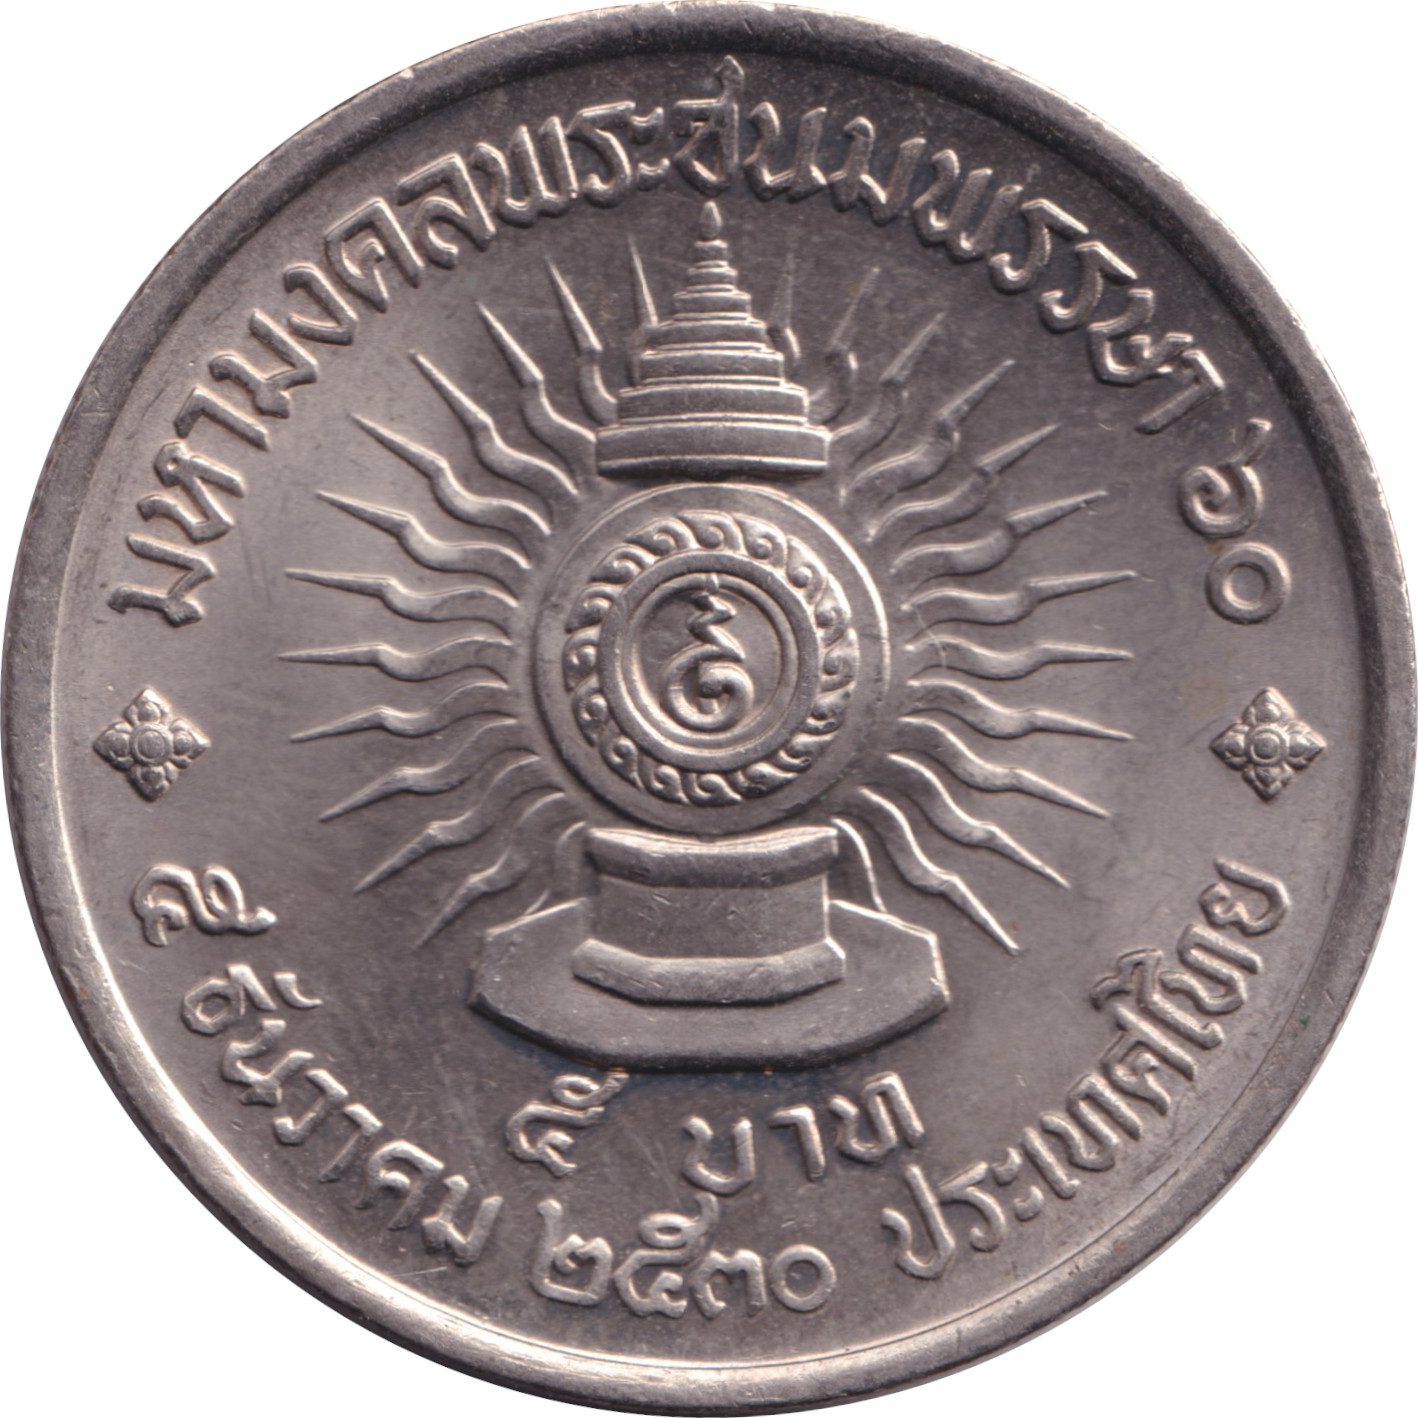 5 baht - Rama IX - 60 years